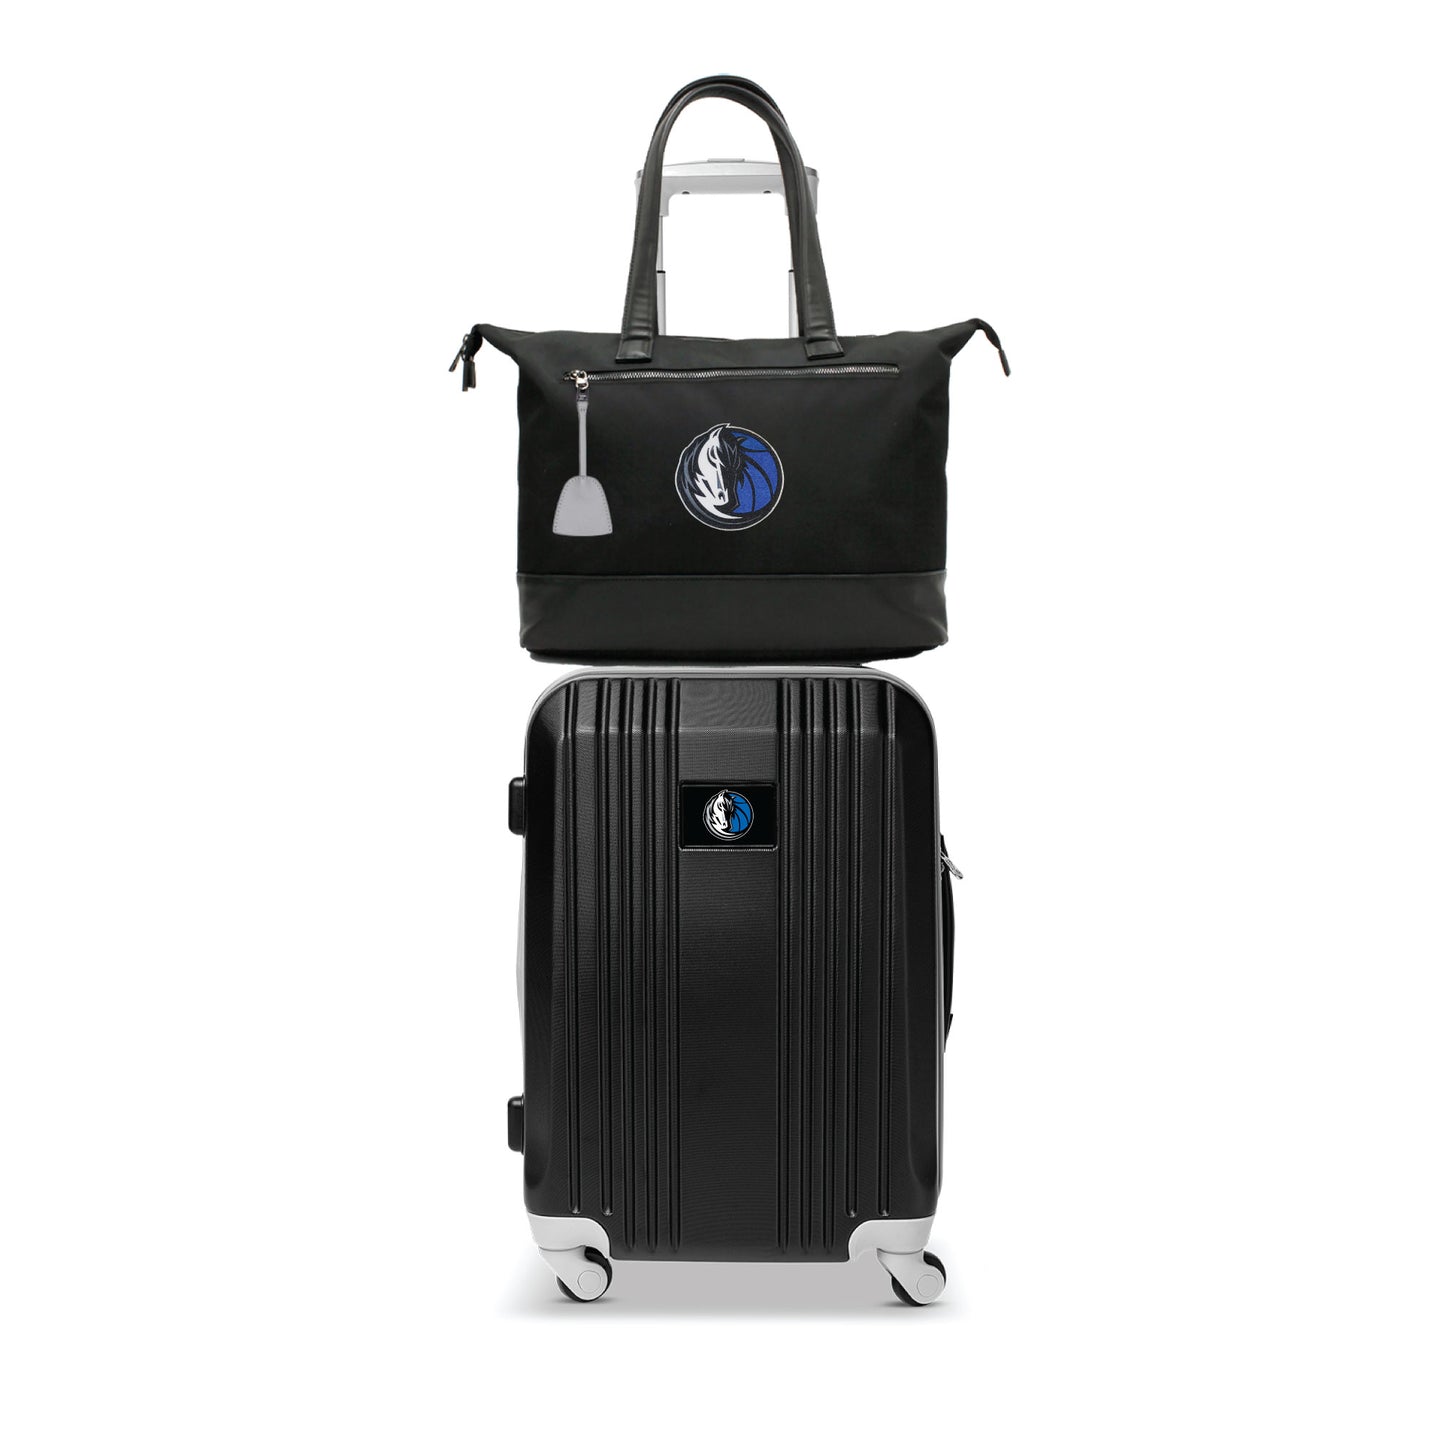 Dallas Mavericks Premium Laptop Tote Bag and Luggage Set